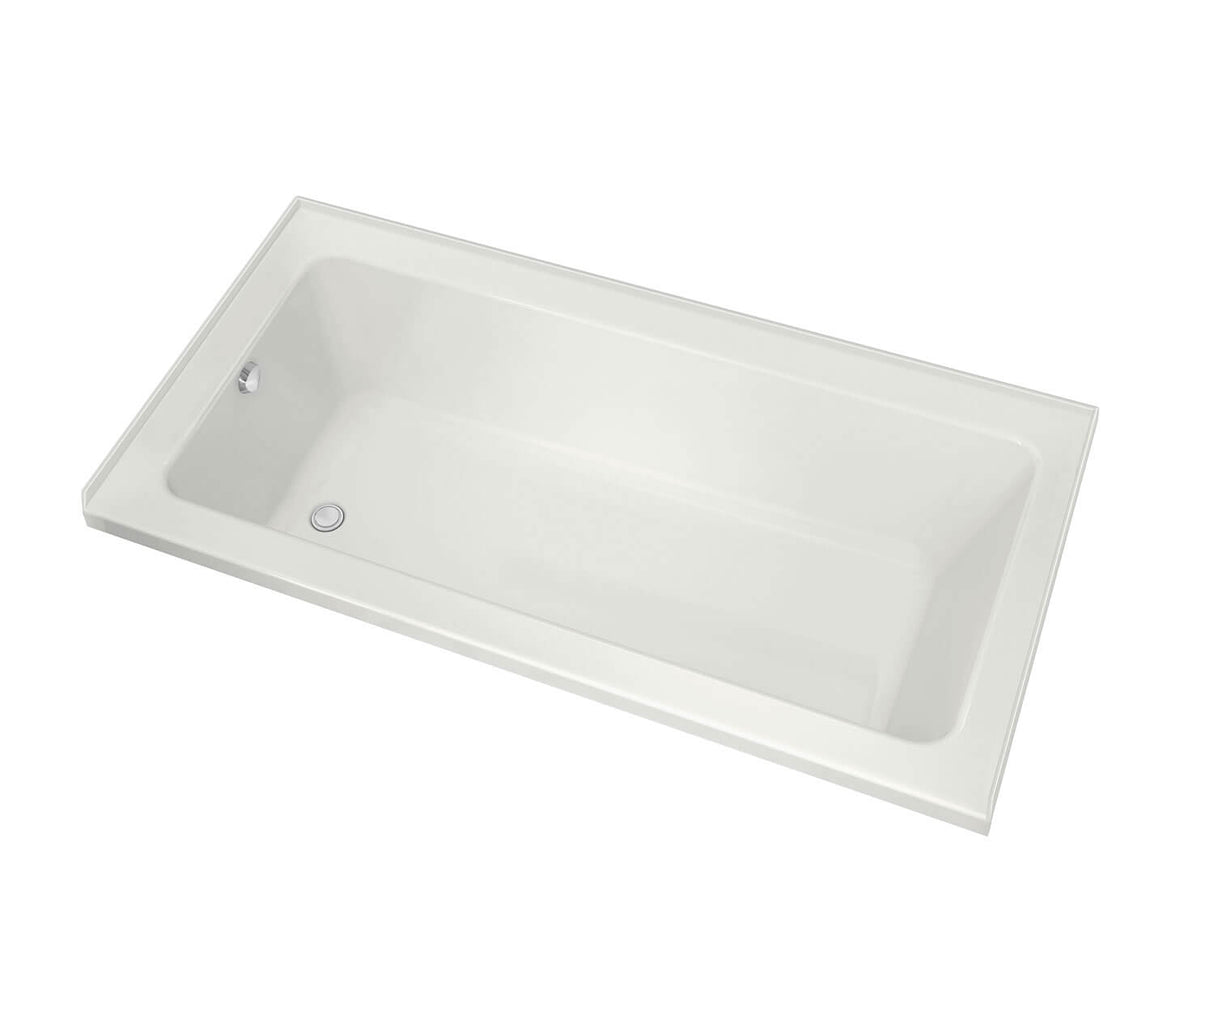 MAAX 106204-L-003-001 Pose 6632 IF Acrylic Alcove Left-Hand Drain Whirlpool Bathtub in White